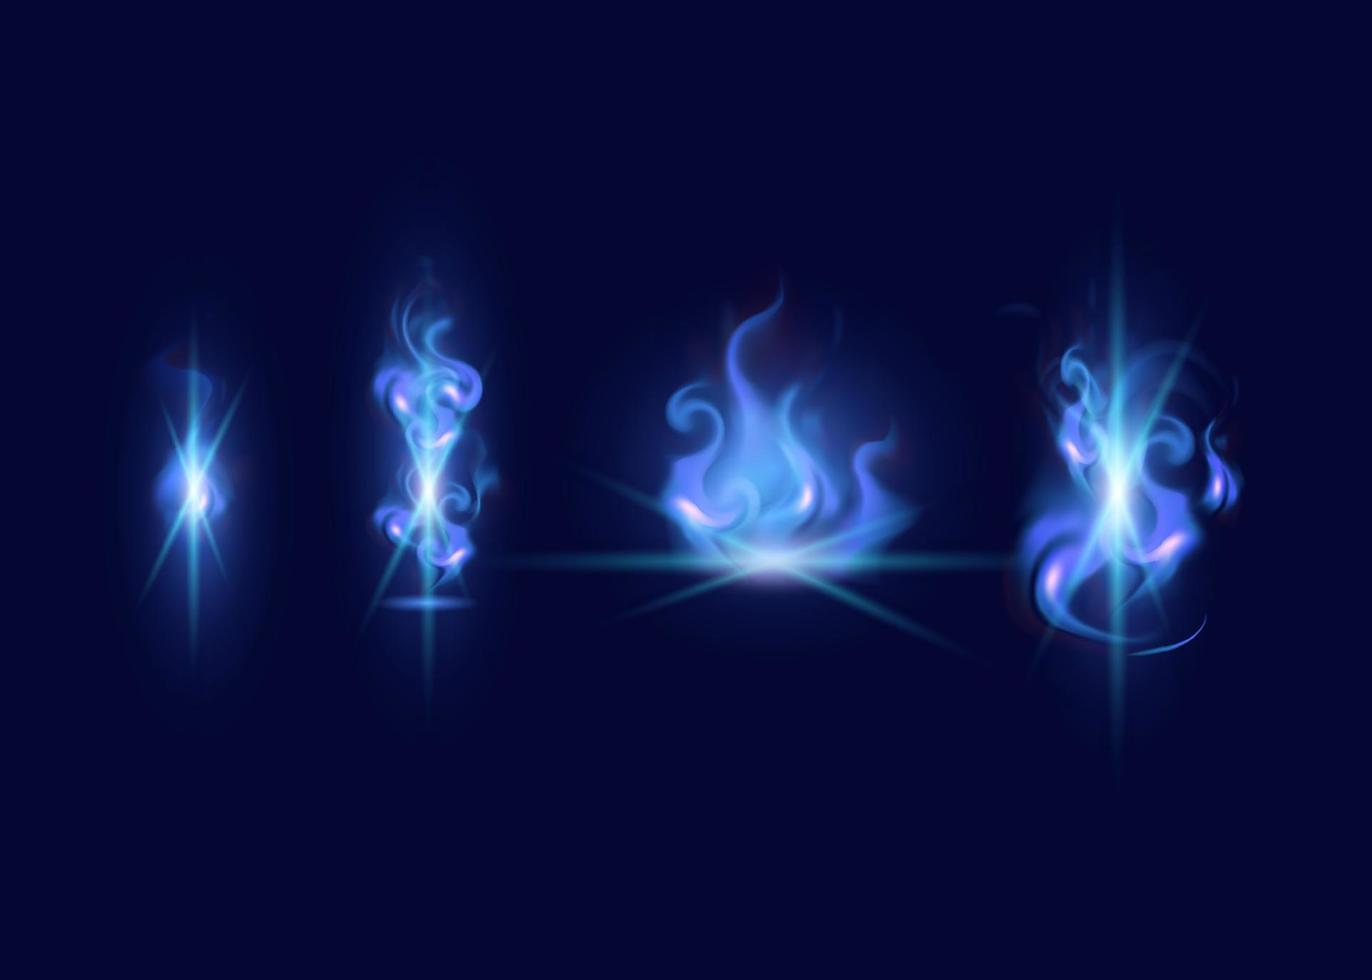 Magic blue fire fantasy style vector